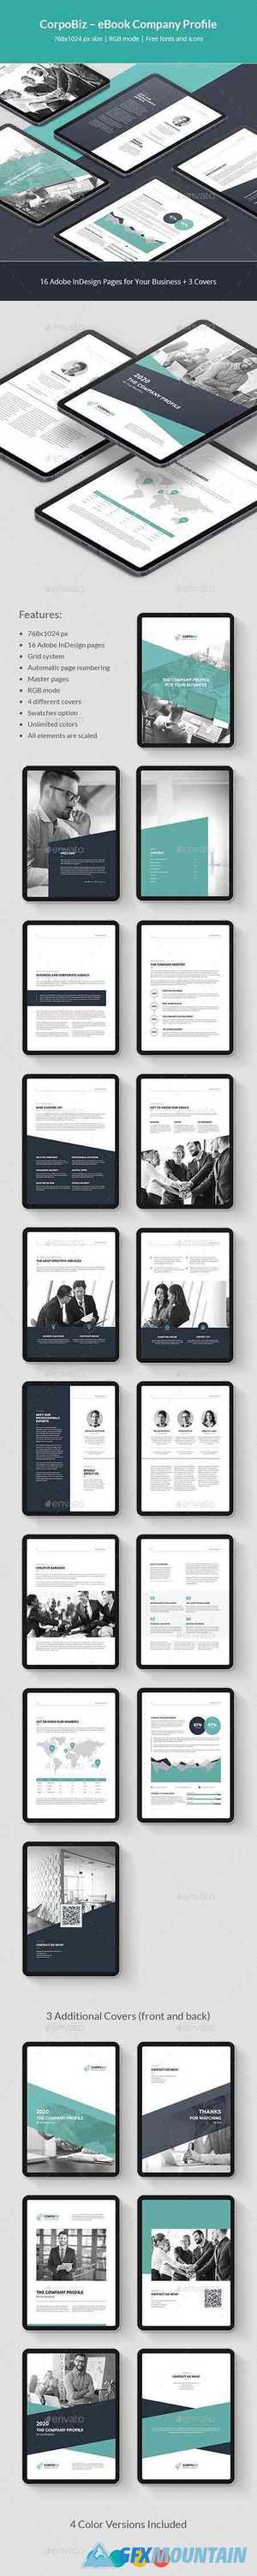 CorpoBiz – Business and Corporate eBook Company Profile 25402008